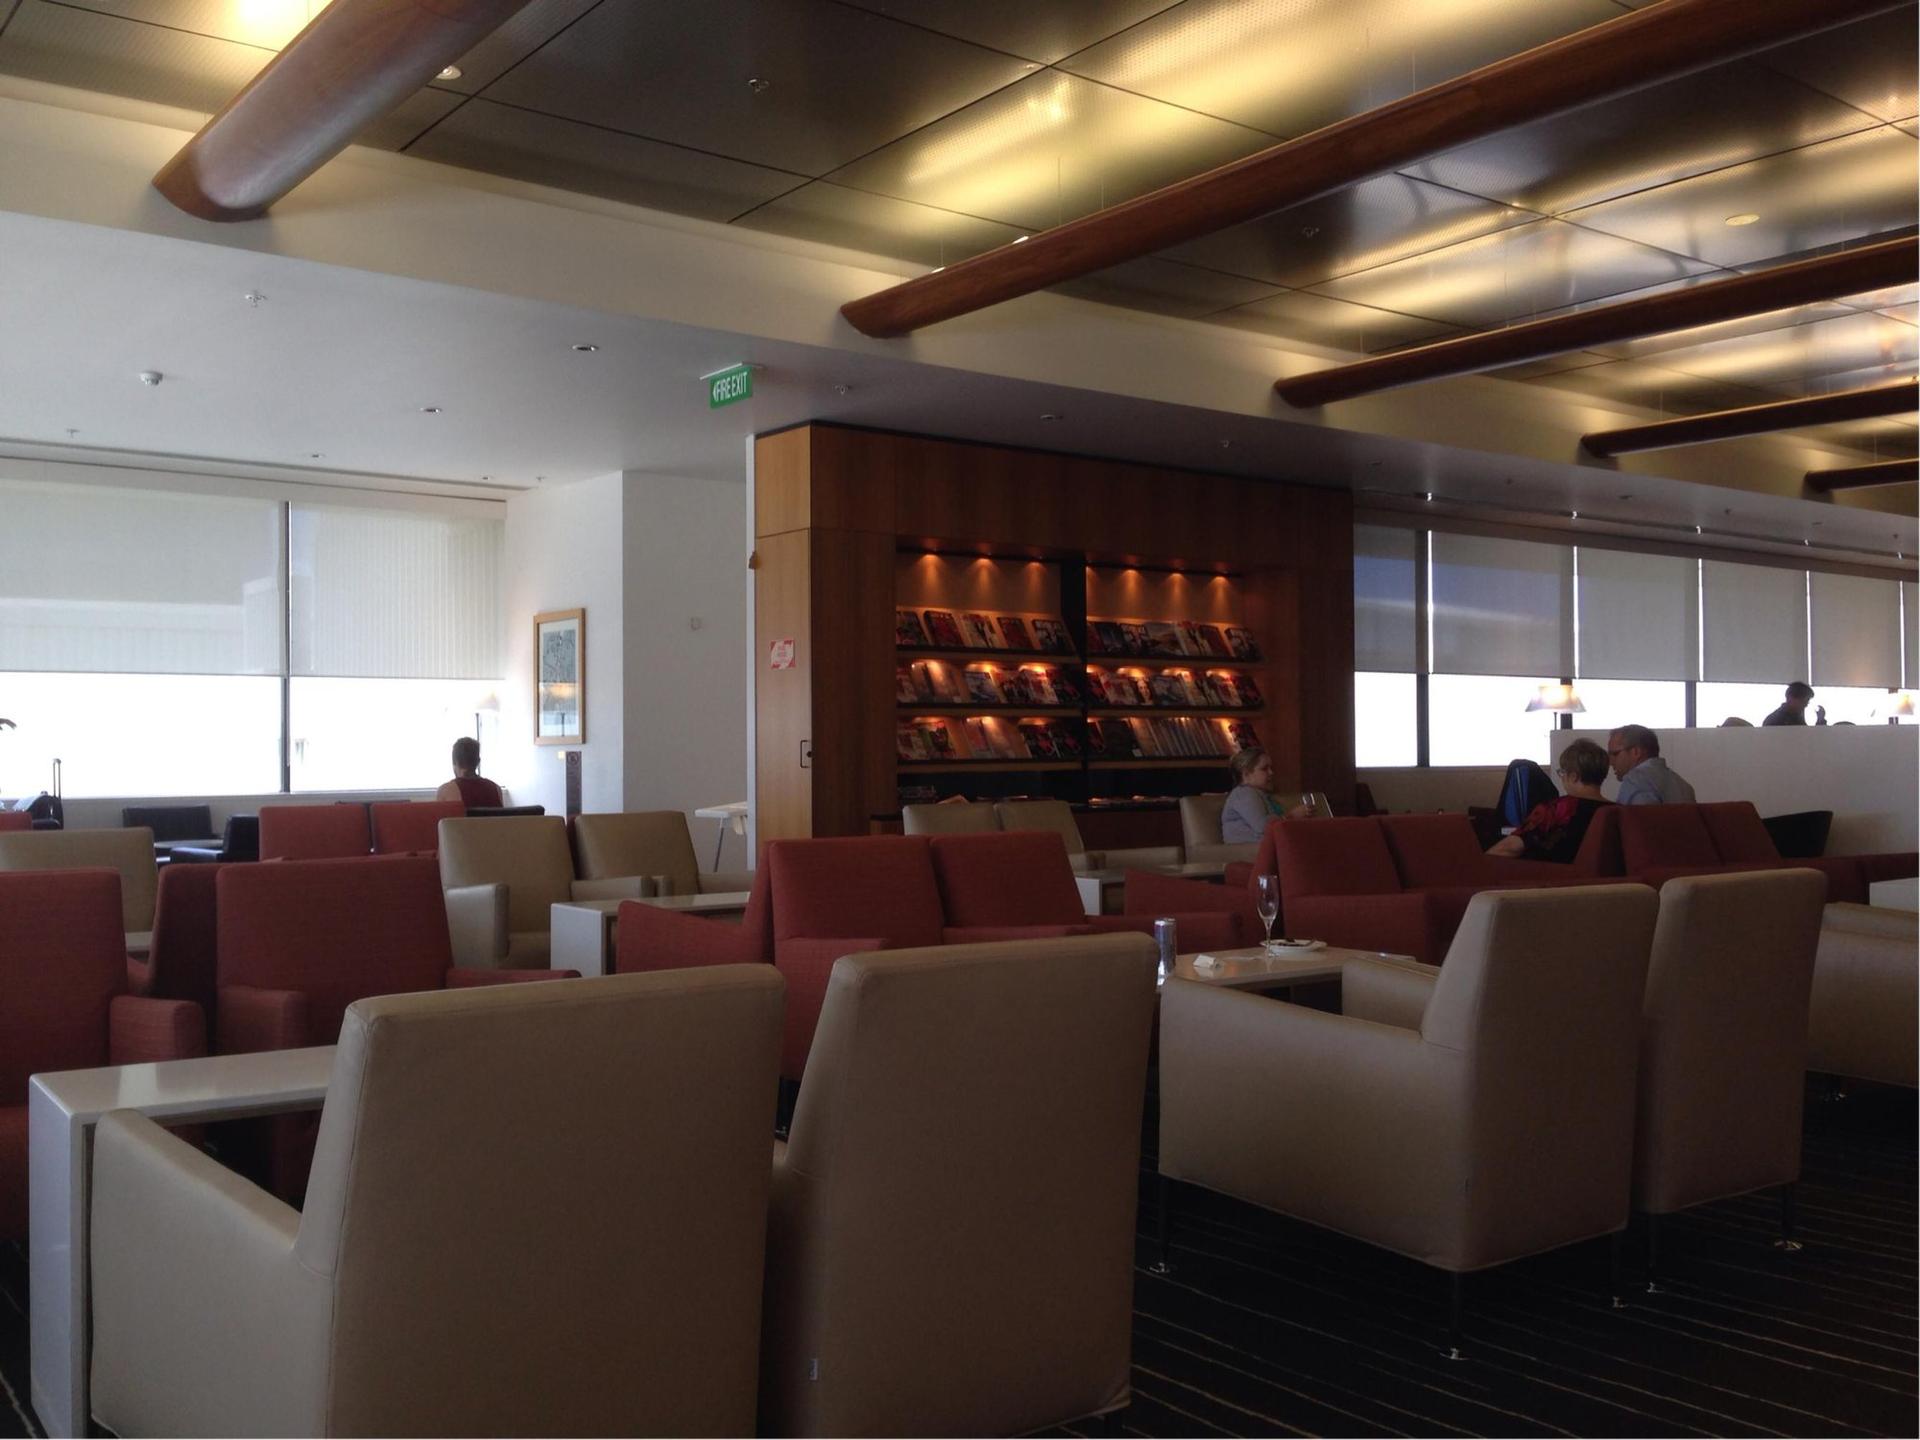 Qantas Airways International Business Lounge image 5 of 37